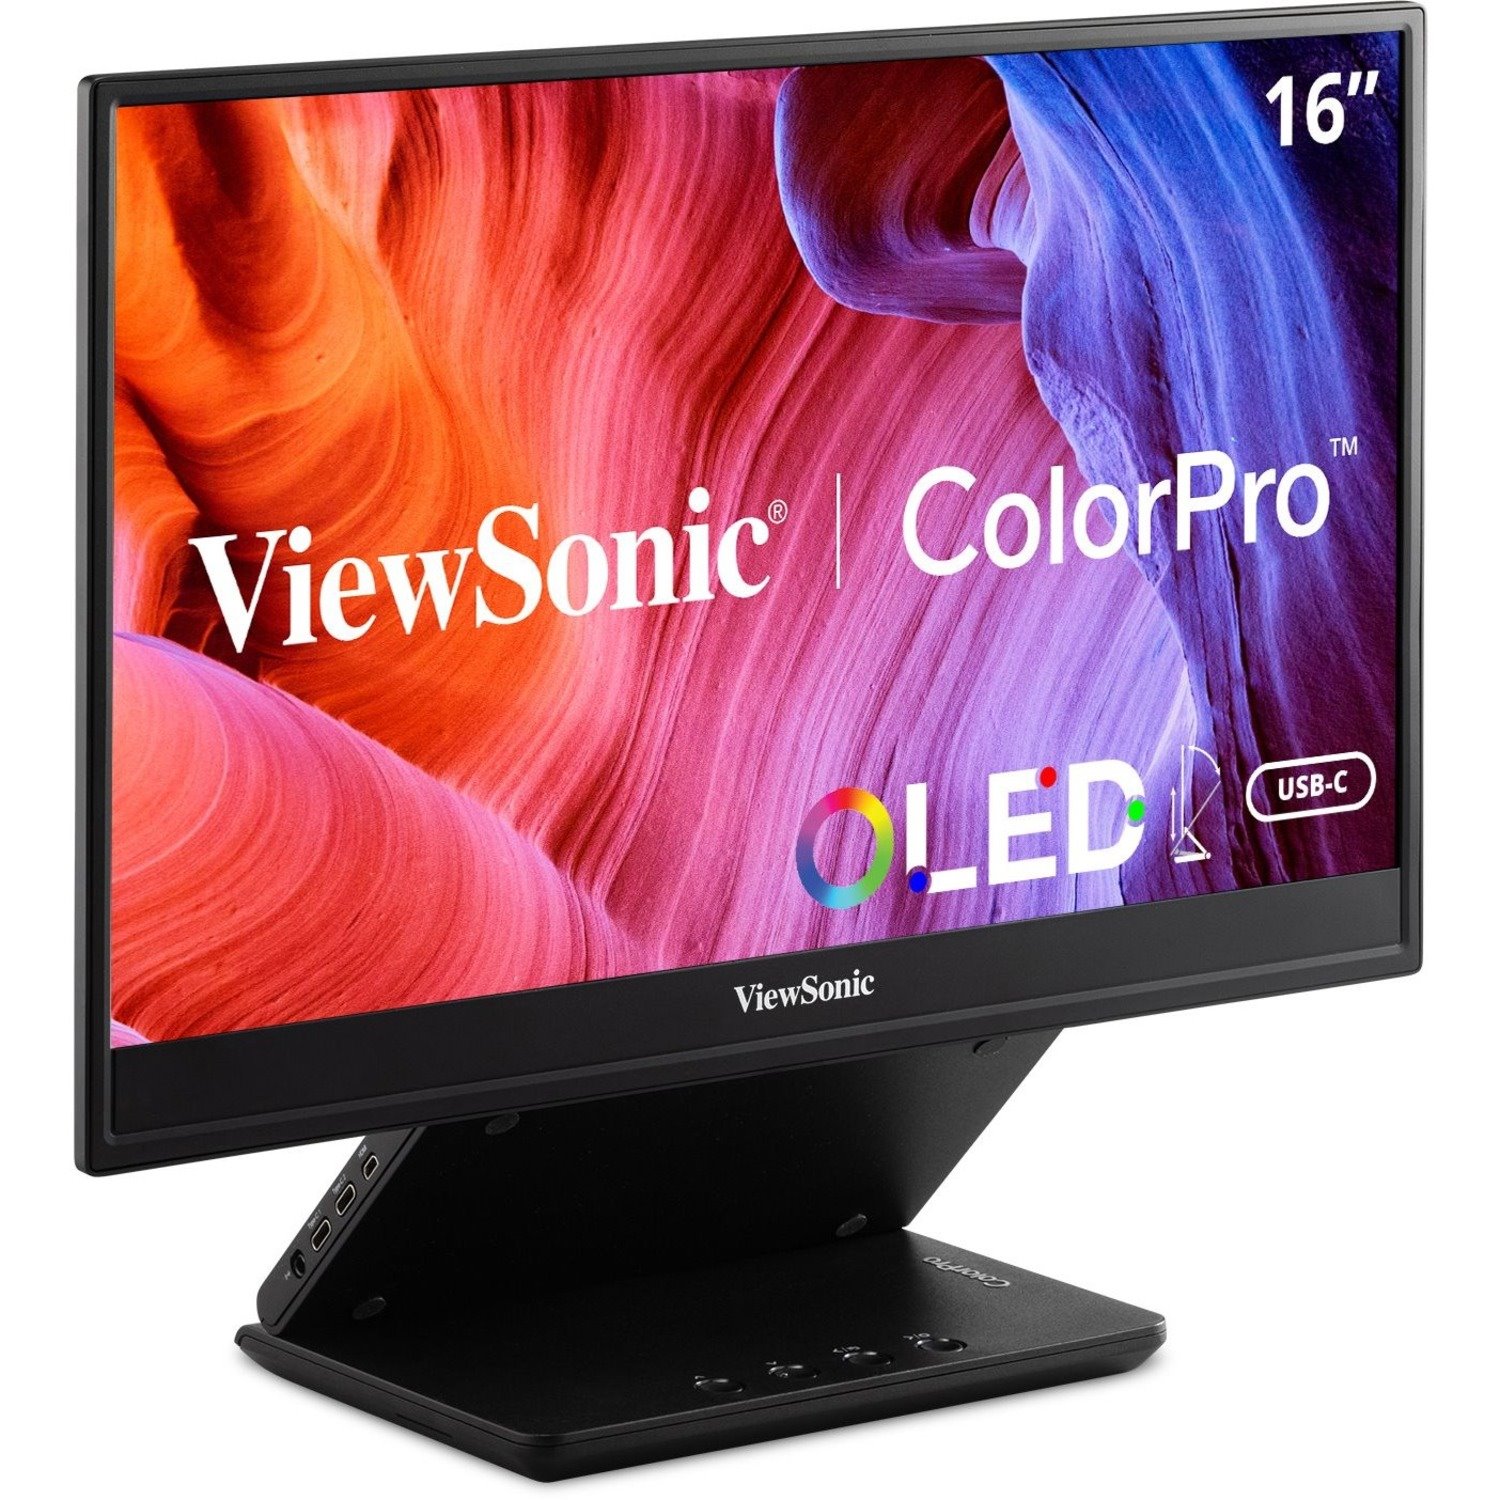 ViewSonic Professional VP16-OLED 16" Class Full HD OLED Monitor - 16:9 - Glossy